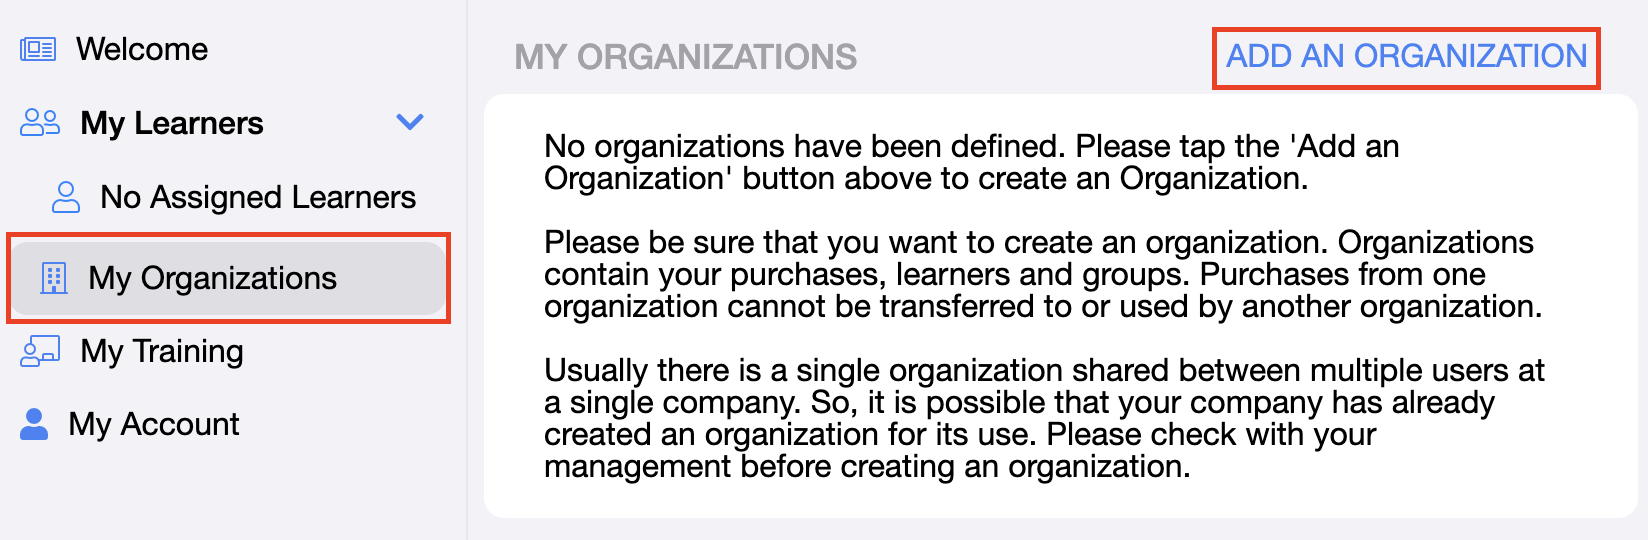 create-organization_en_1.png